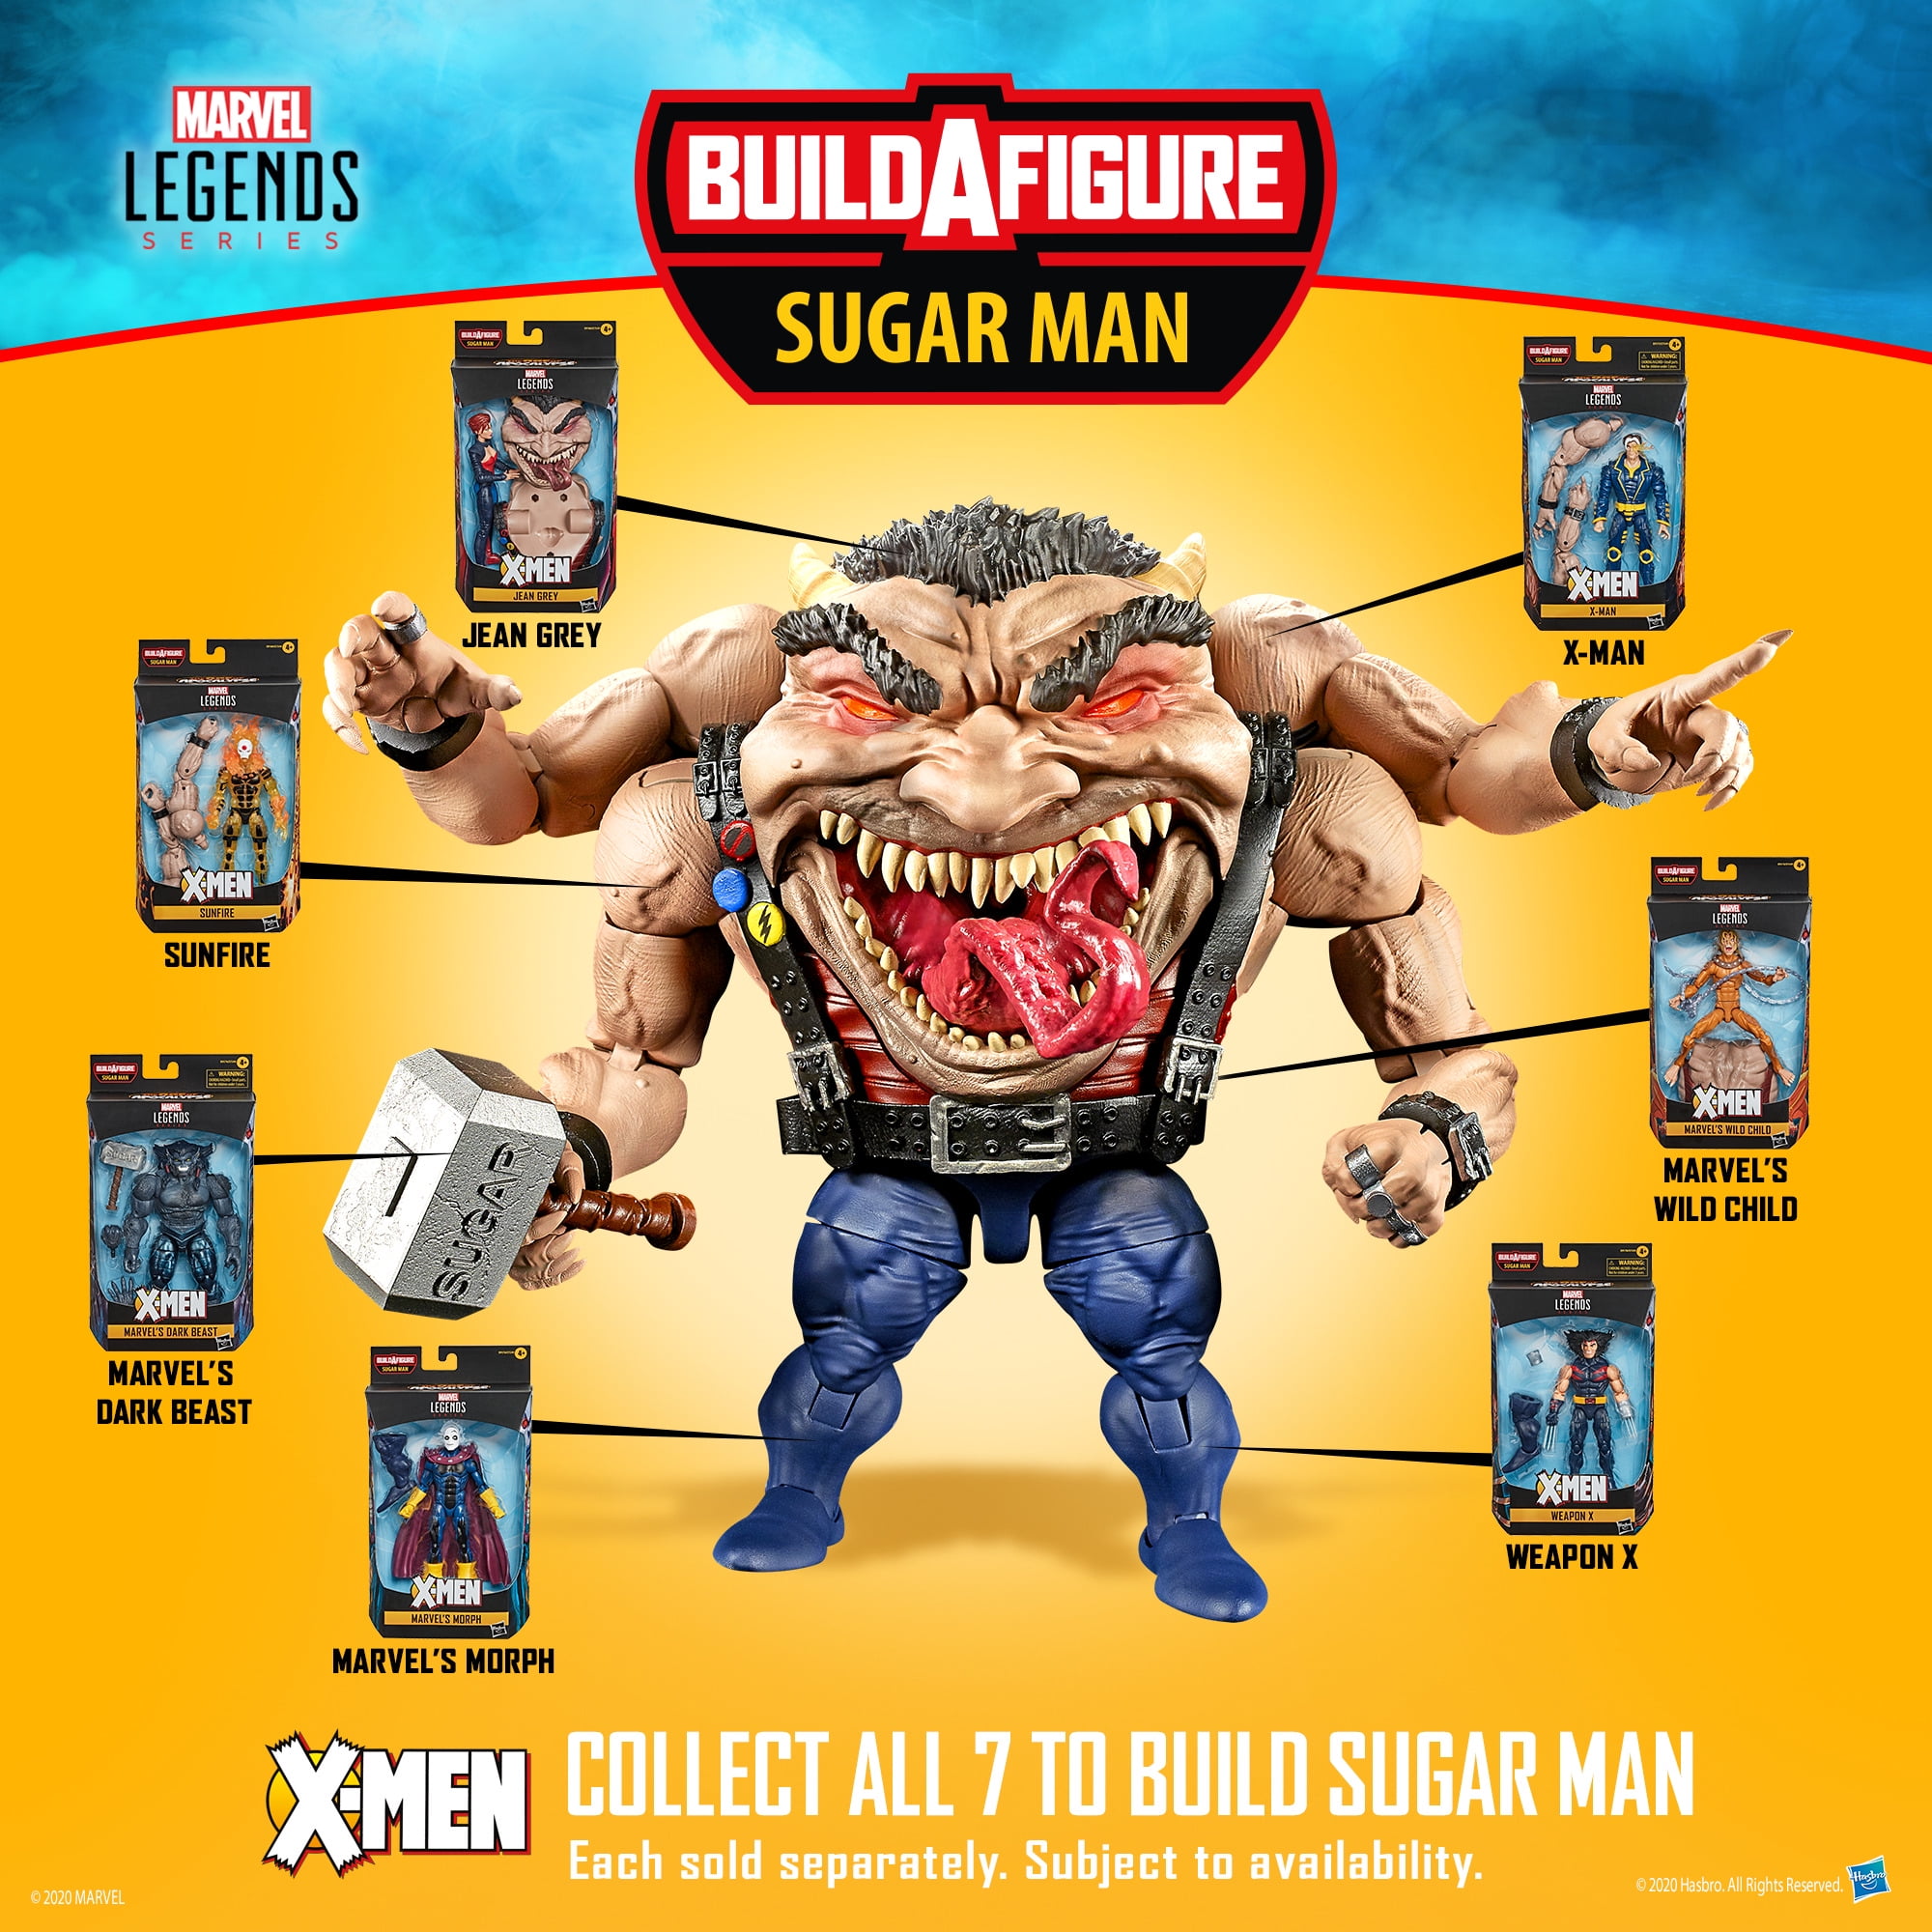 Hasbro Marvel Legends 6-inch X-Man X-Men: Age of Apocalypse Figure